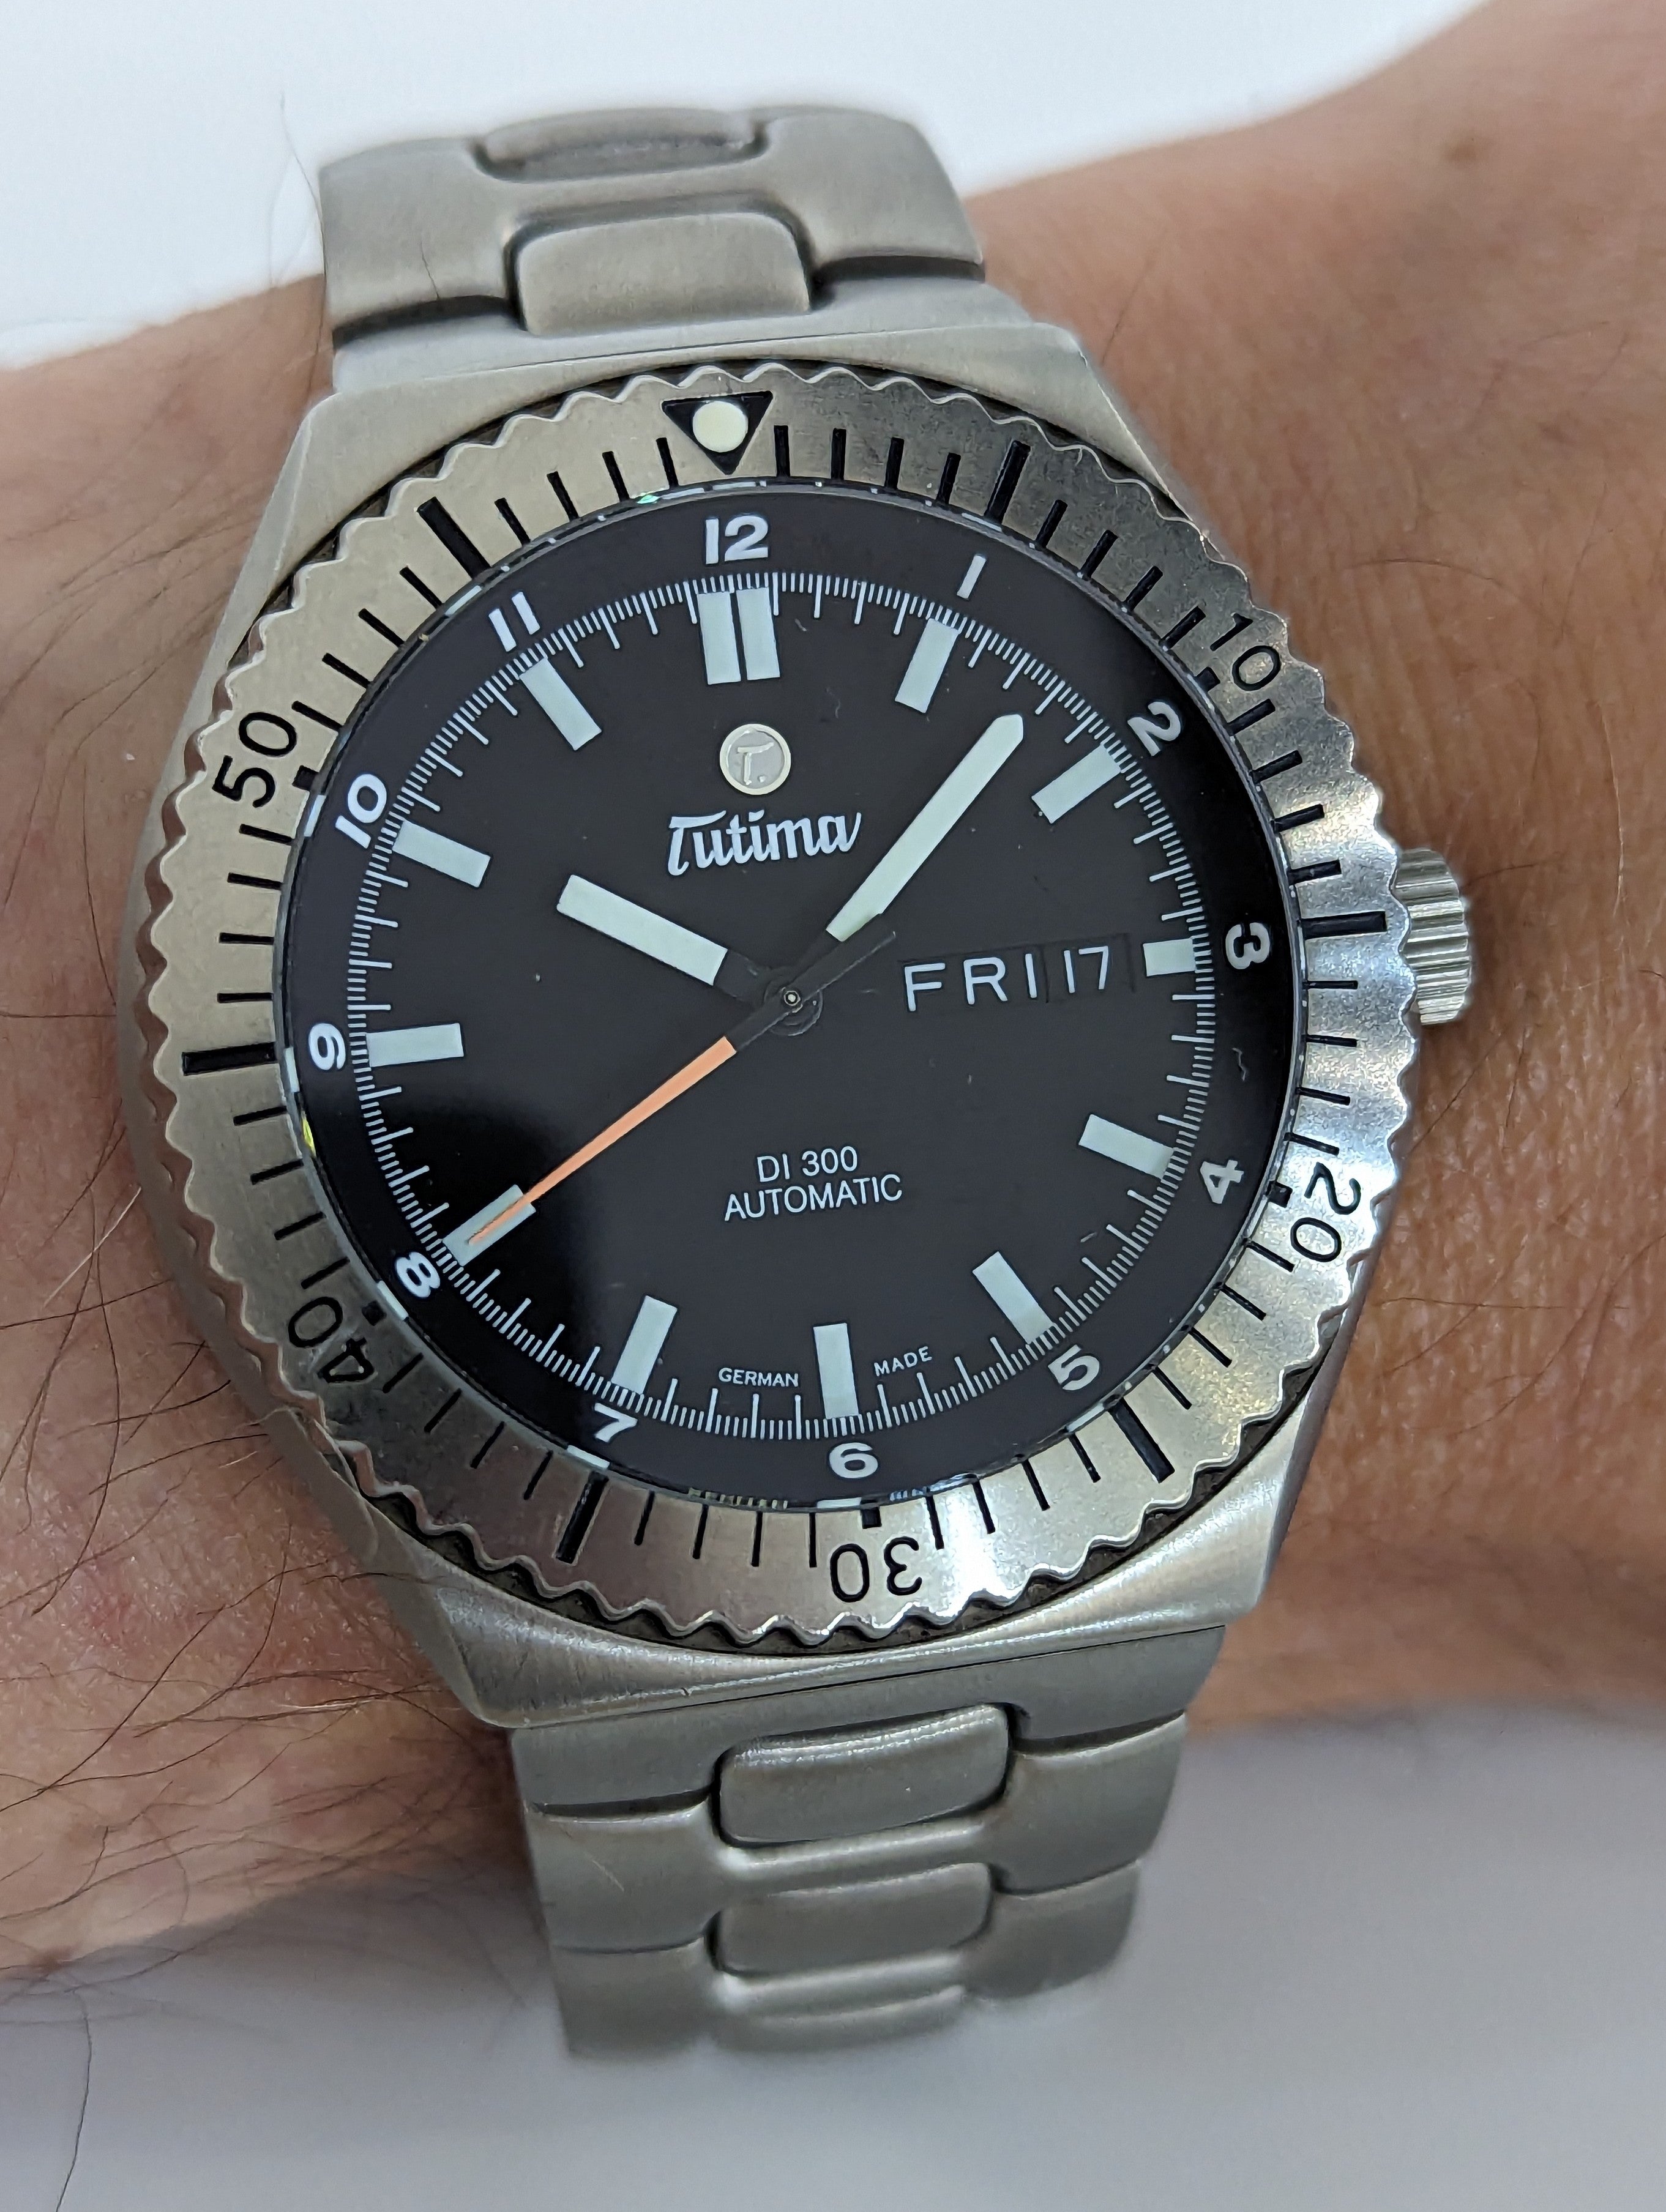 Tutima DI300 Titanium Wristwatch - Francis Jewellers